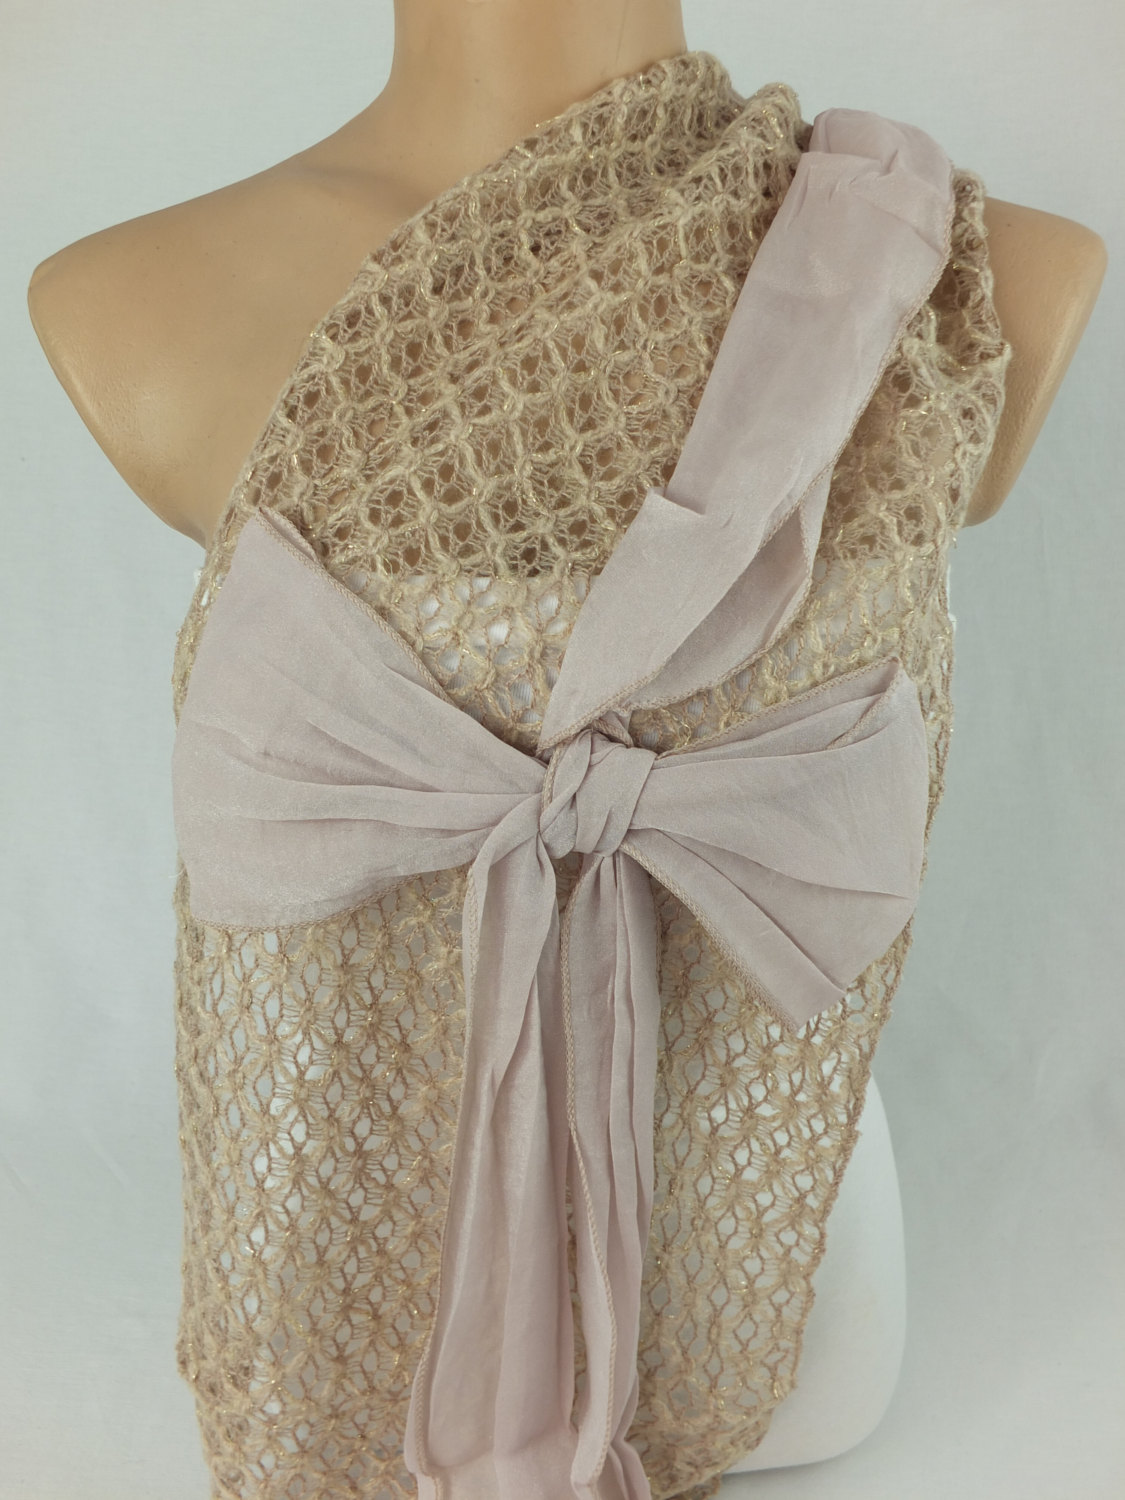 Ecru- Tan Scarf Shawl, Bow Tie Scarf,knit Fabric And Chiffon Scarf, Elegant Woman Scarf, Christmas Gift, Gift For Her